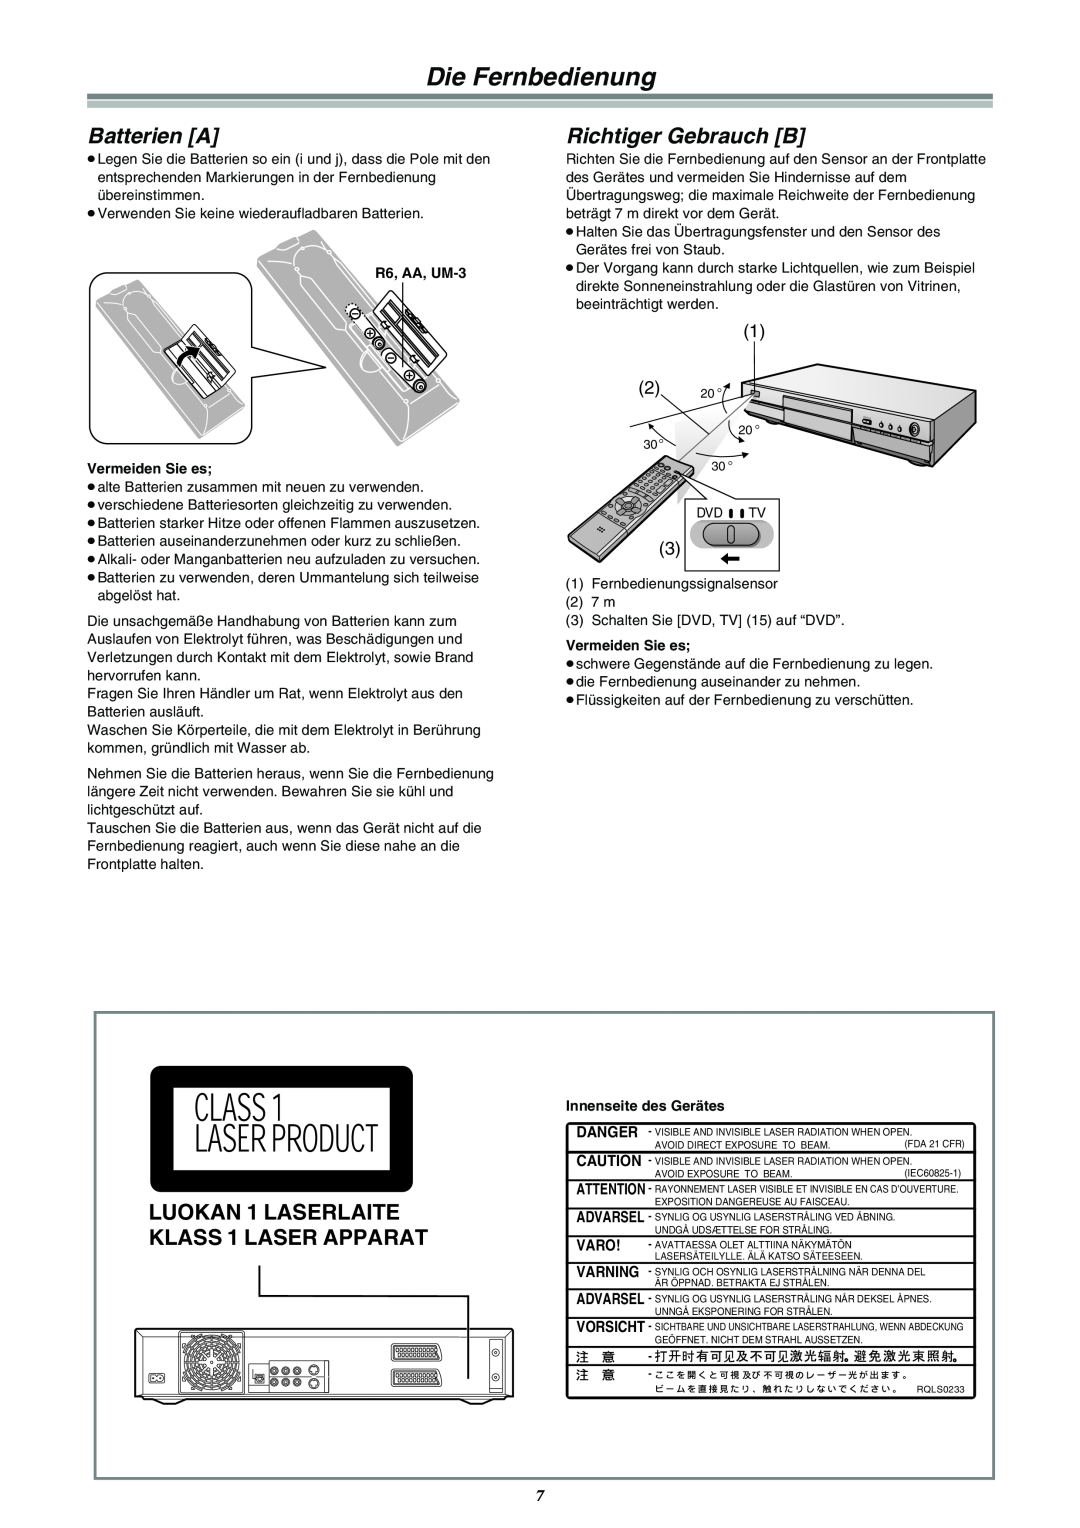 Panasonic DMR-E30 manual Batterien A, Richtiger Gebrauch B, Advarsel, Die Fernbedienung, FDA 21 CFR, IEC60825-1, Open/Close 